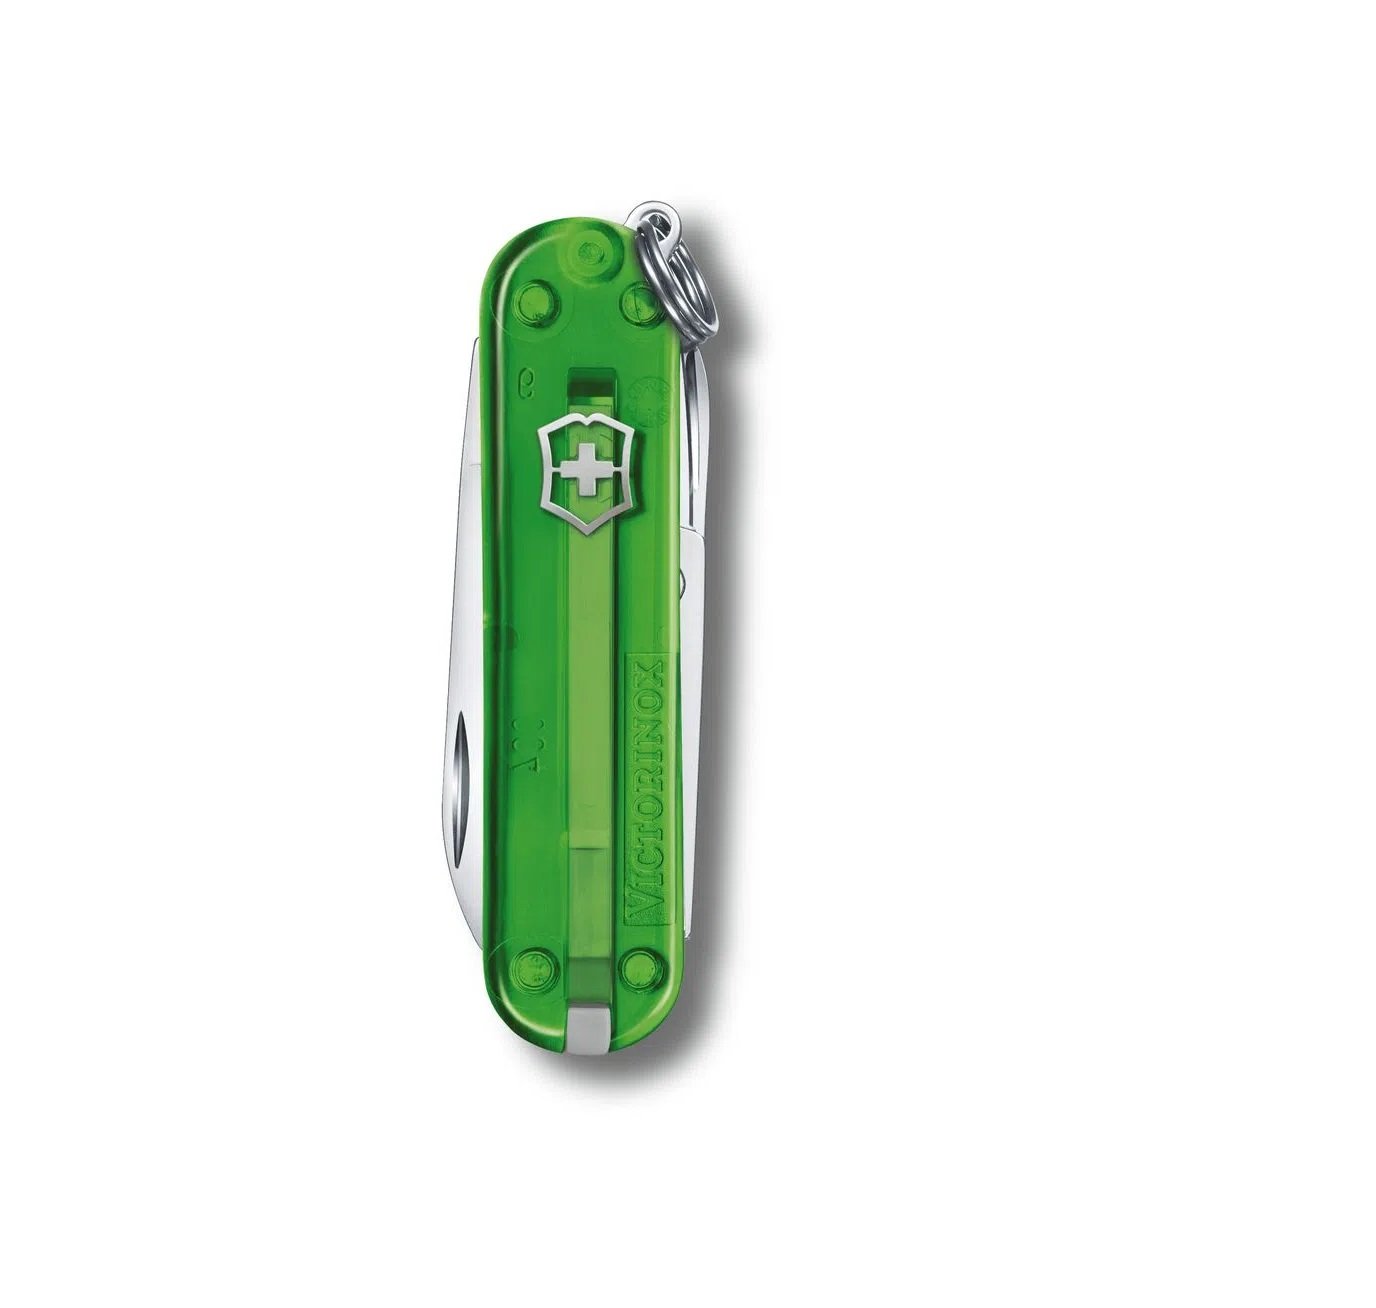 Mini Canivete Suíço Classic 7 funções SD Colors Verde Green Tea Victorinox - 2